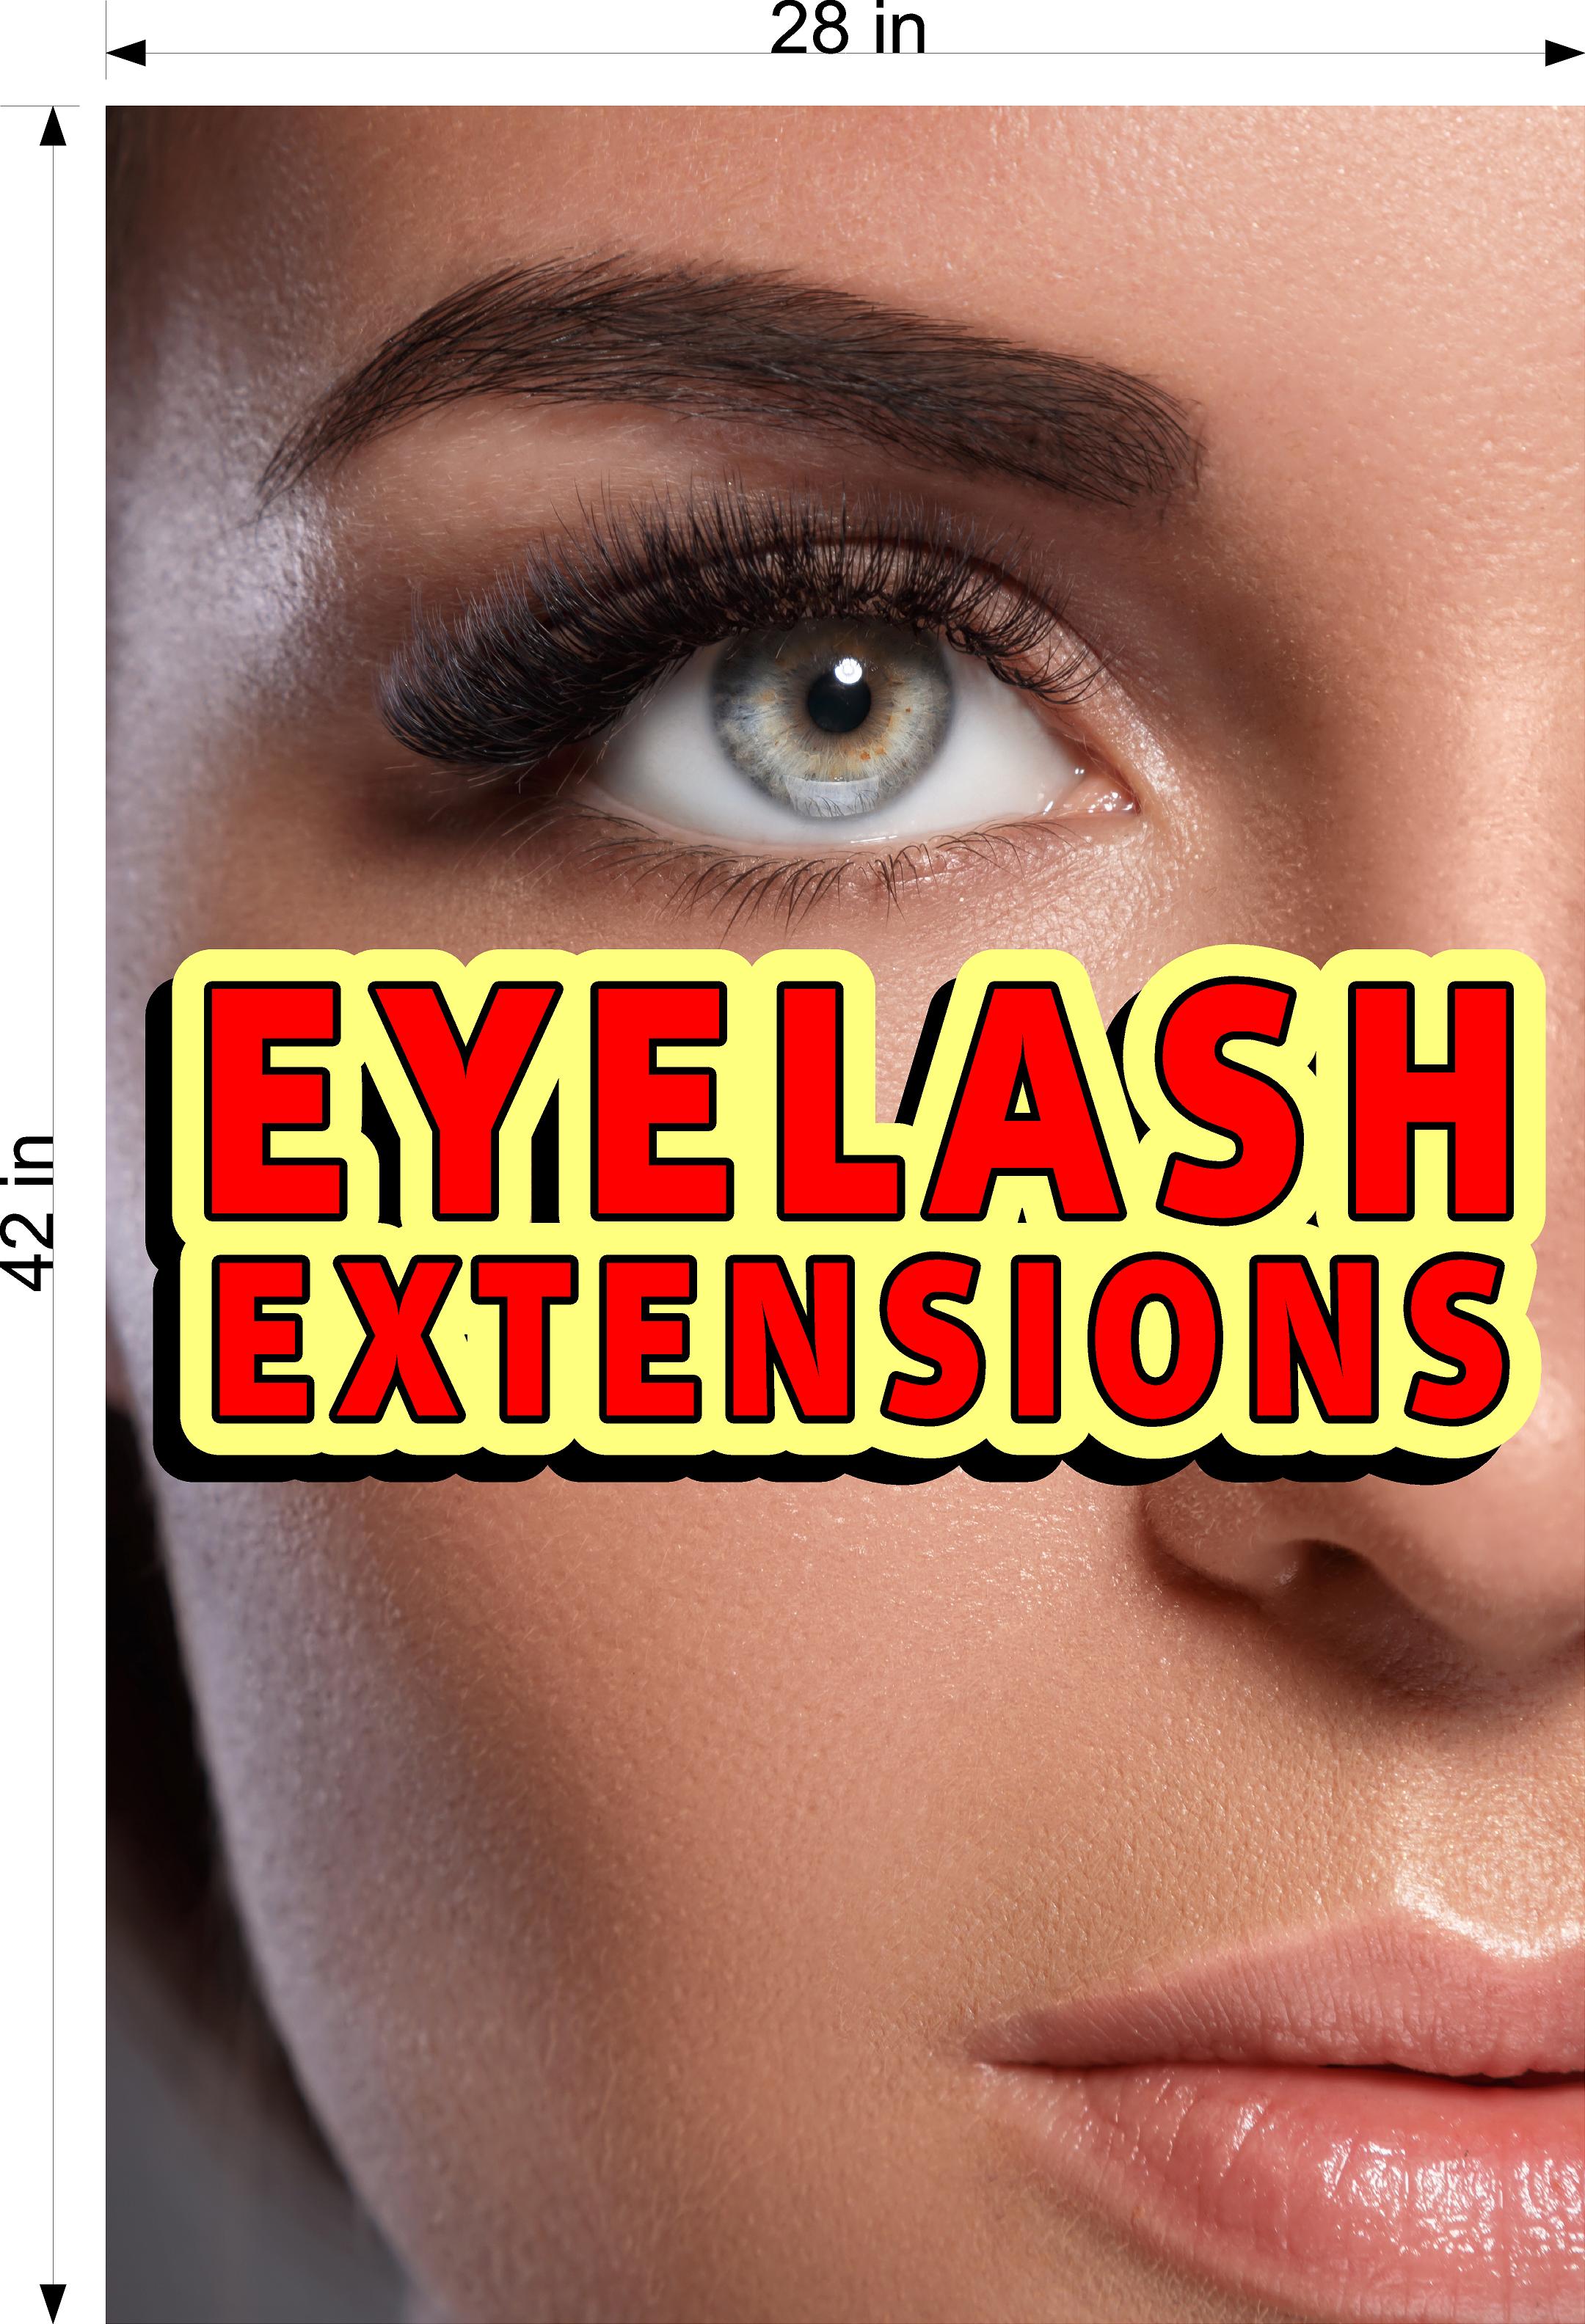 Eyelash 10 Perforated Mesh One Way Vision See-Through Window Vinyl Salon Sign Extension Vertical